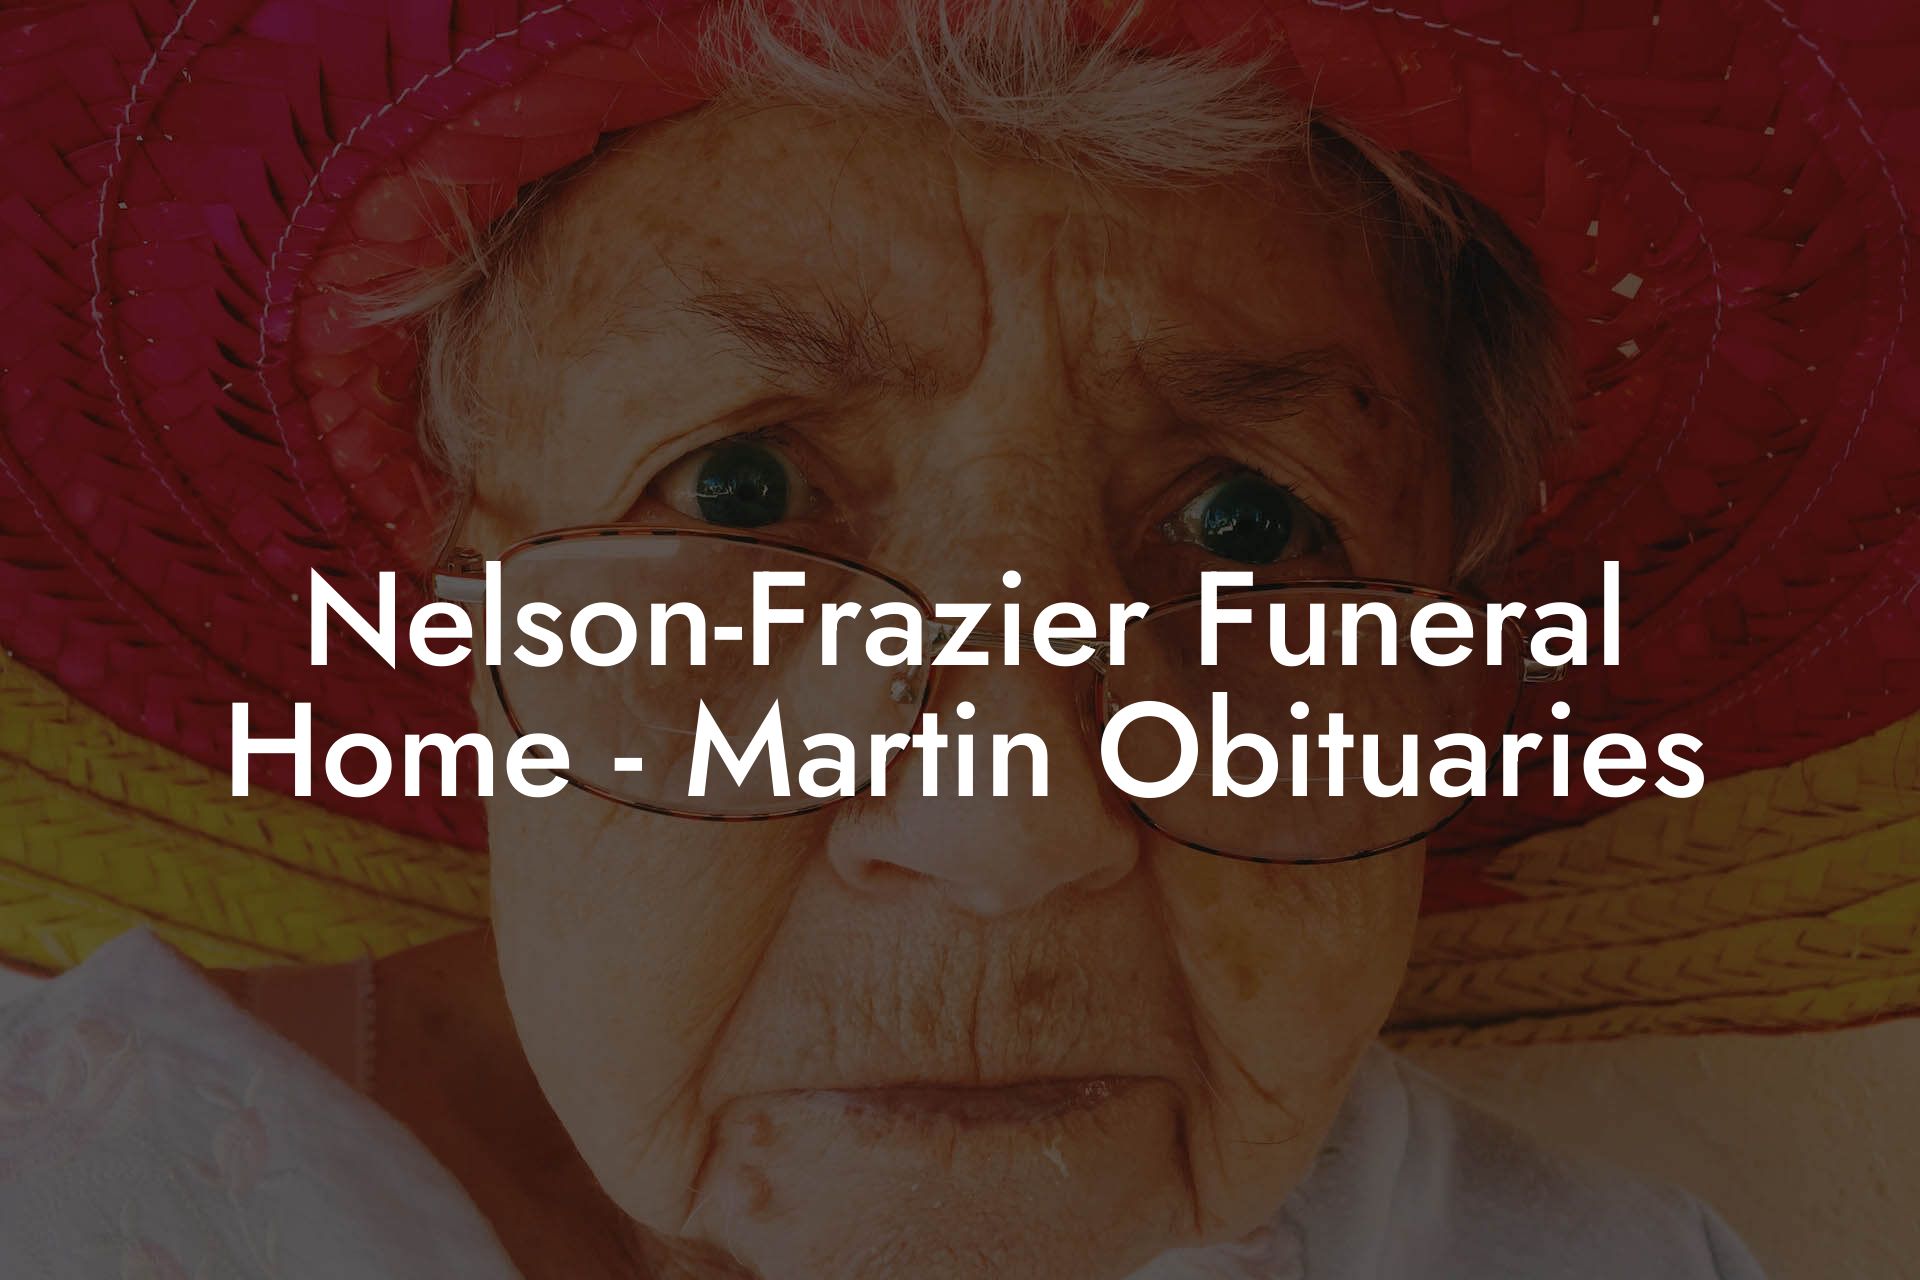 Nelson-Frazier Funeral Home - Martin Obituaries